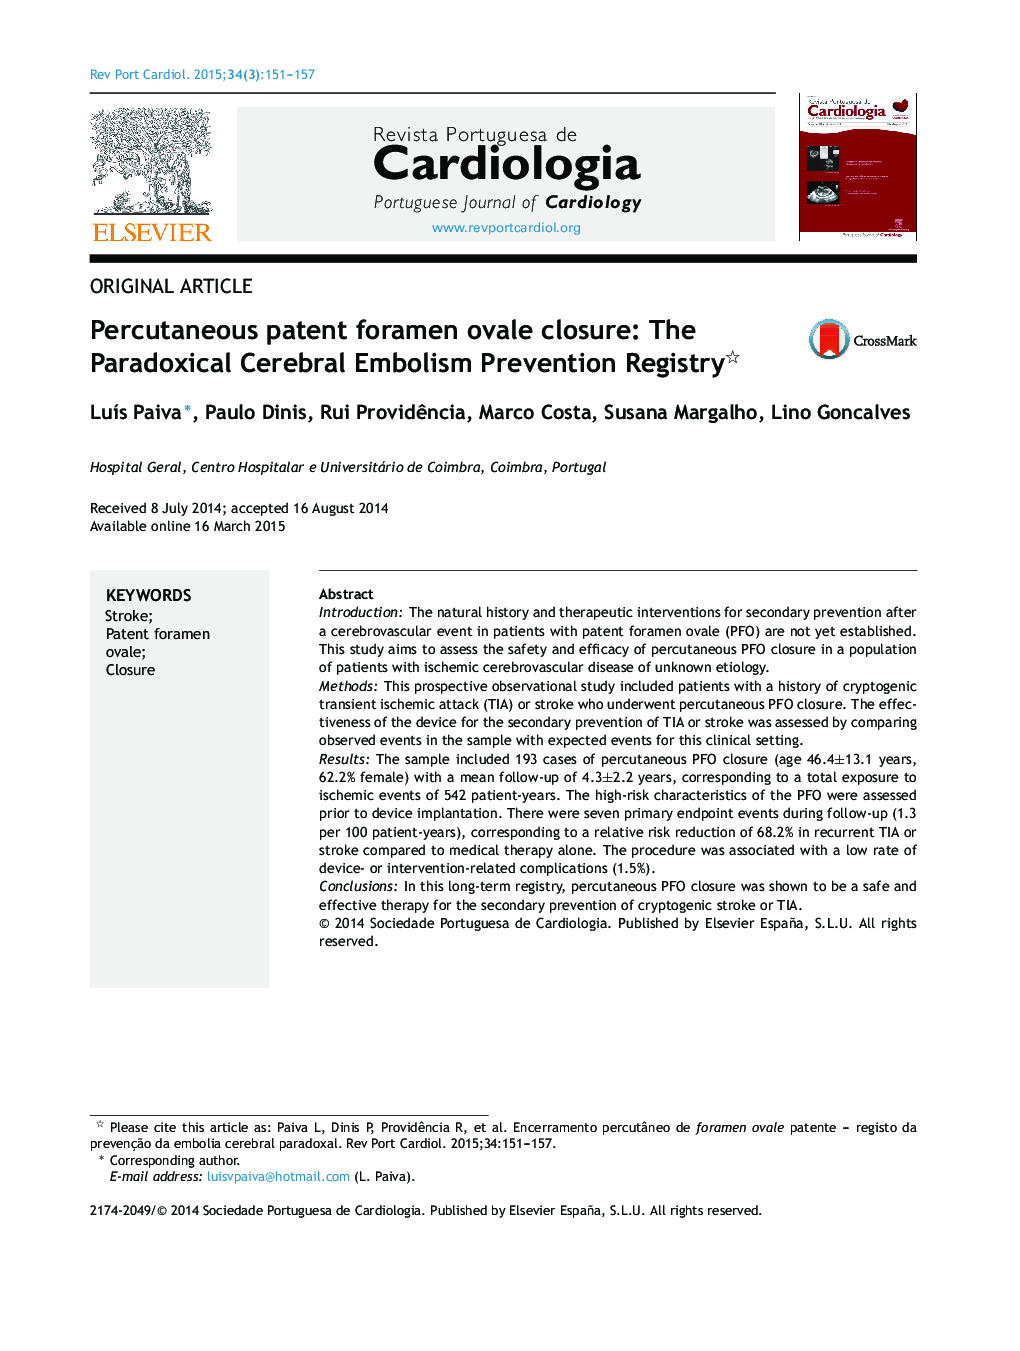 Percutaneous patent foramen ovale closure: The Paradoxical Cerebral Embolism Prevention Registry 